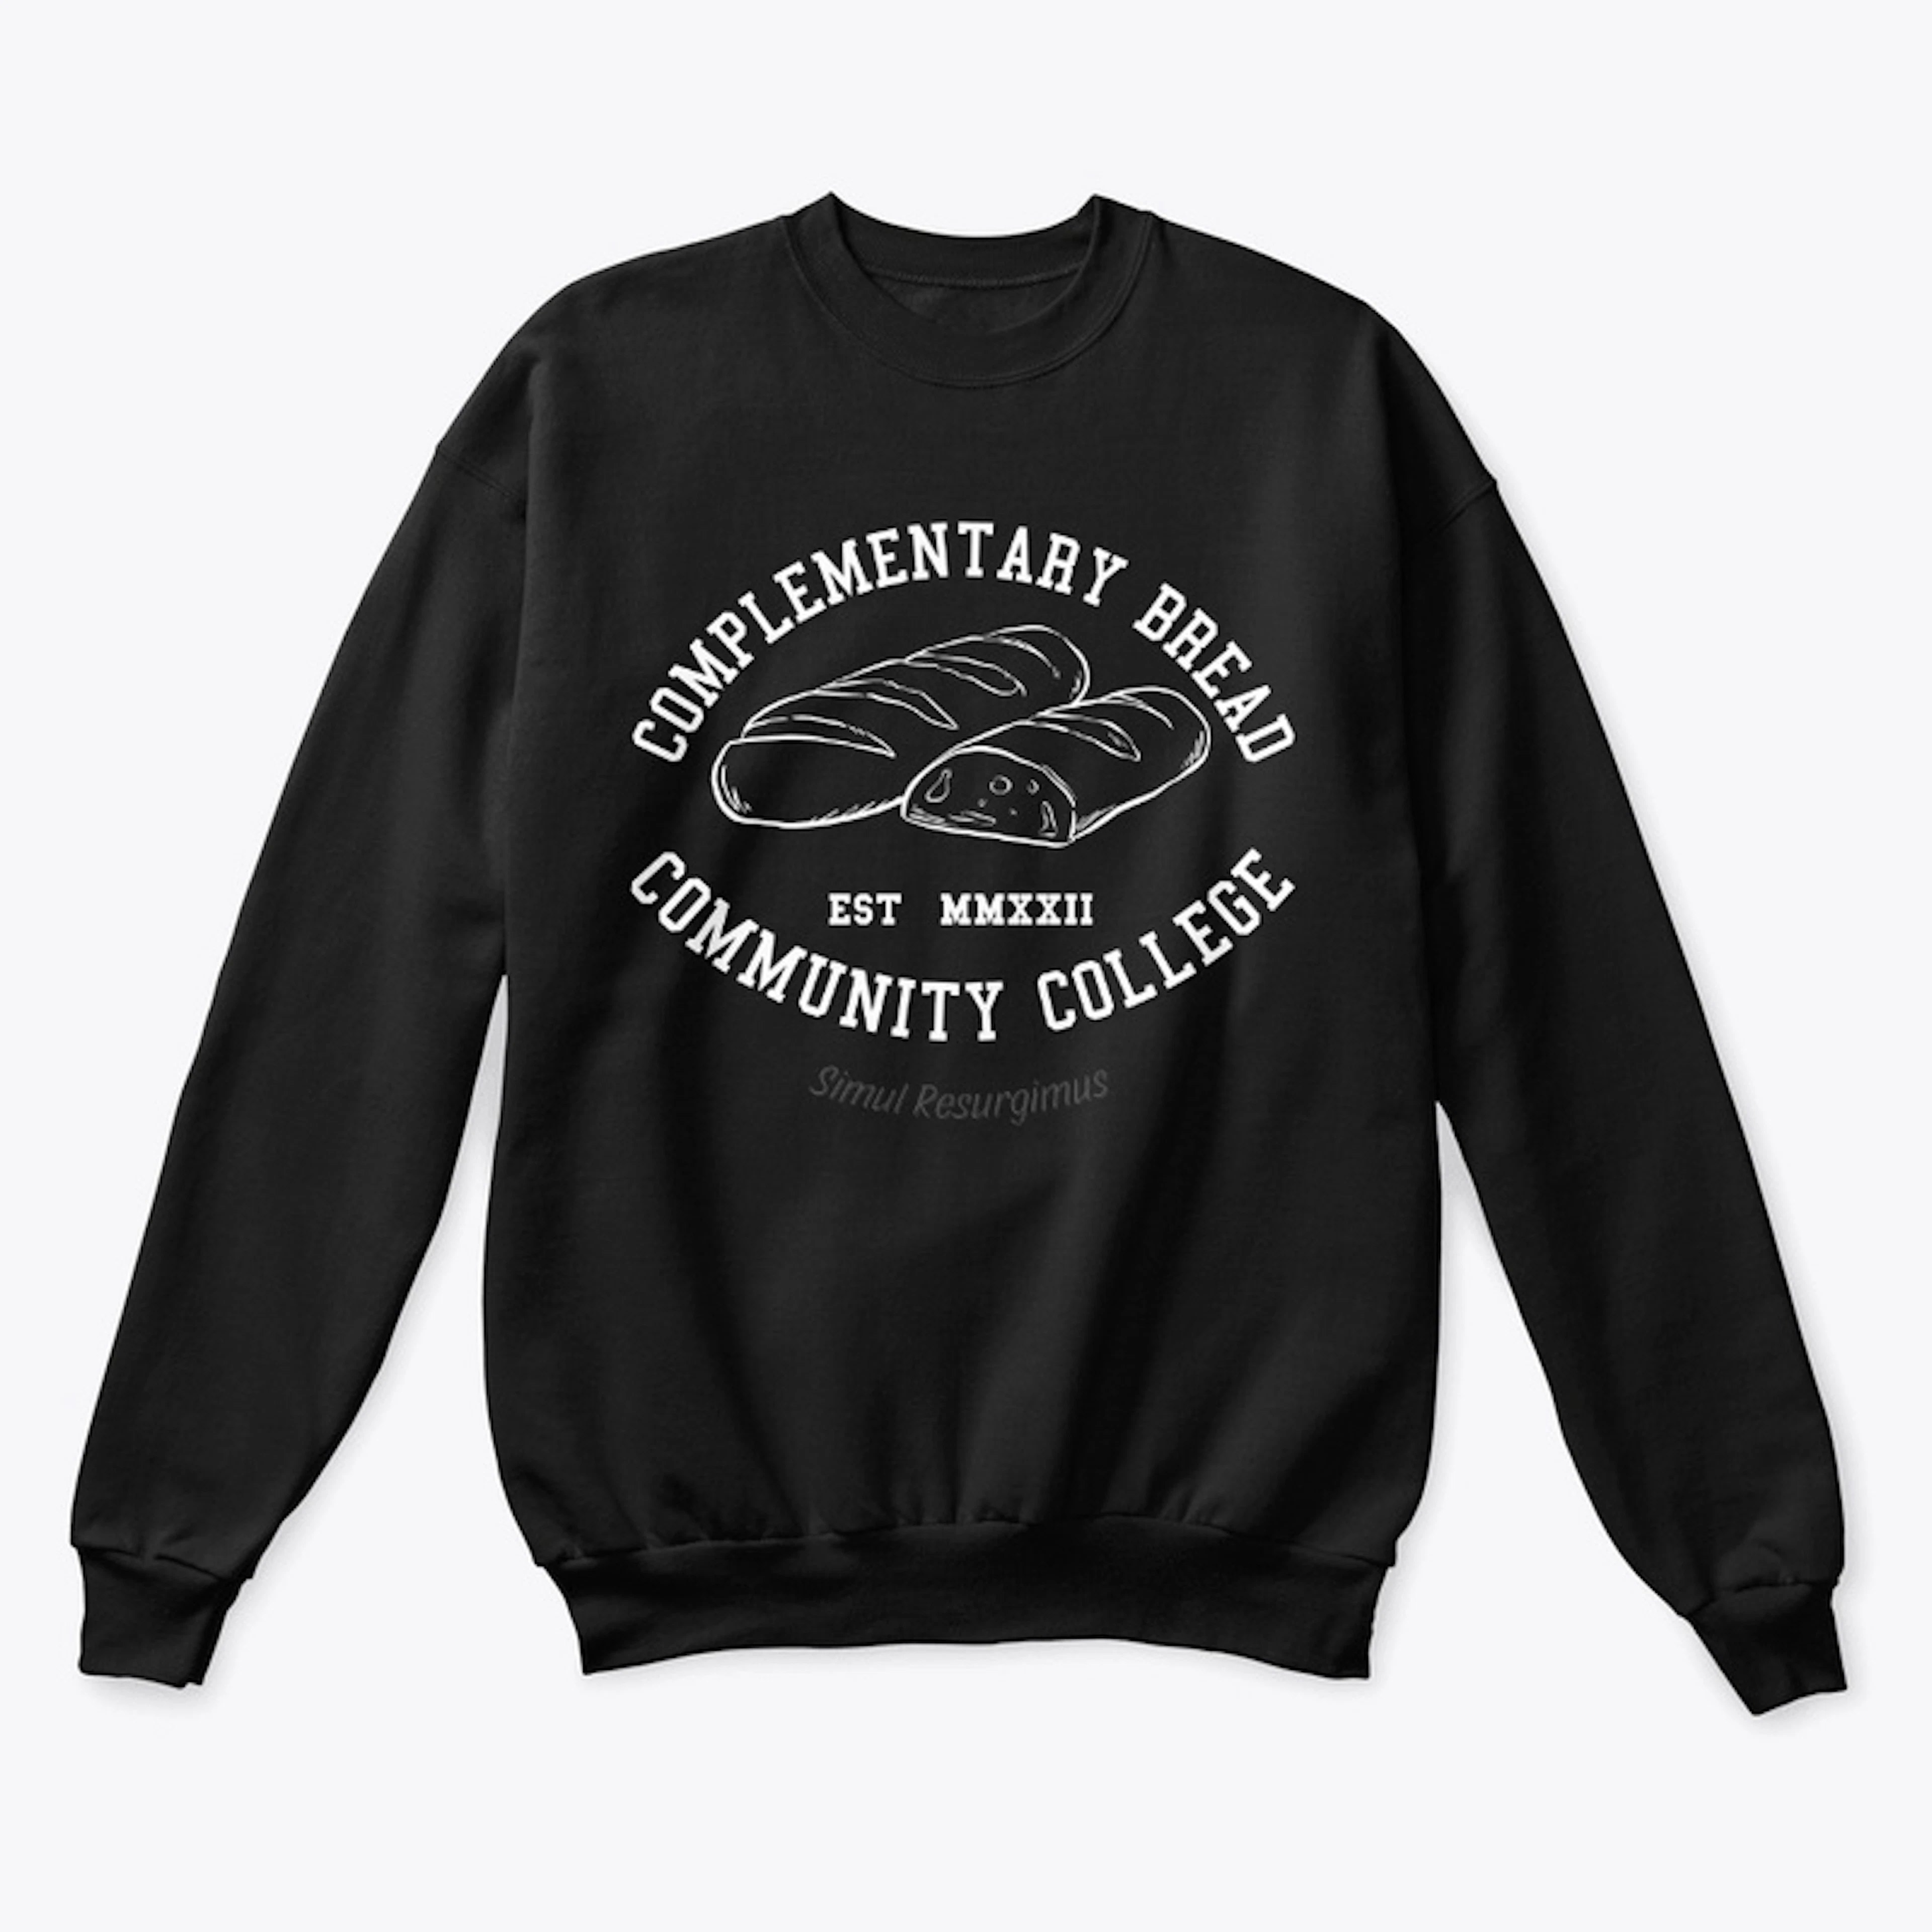 CBCC Sweatshirt - Dark